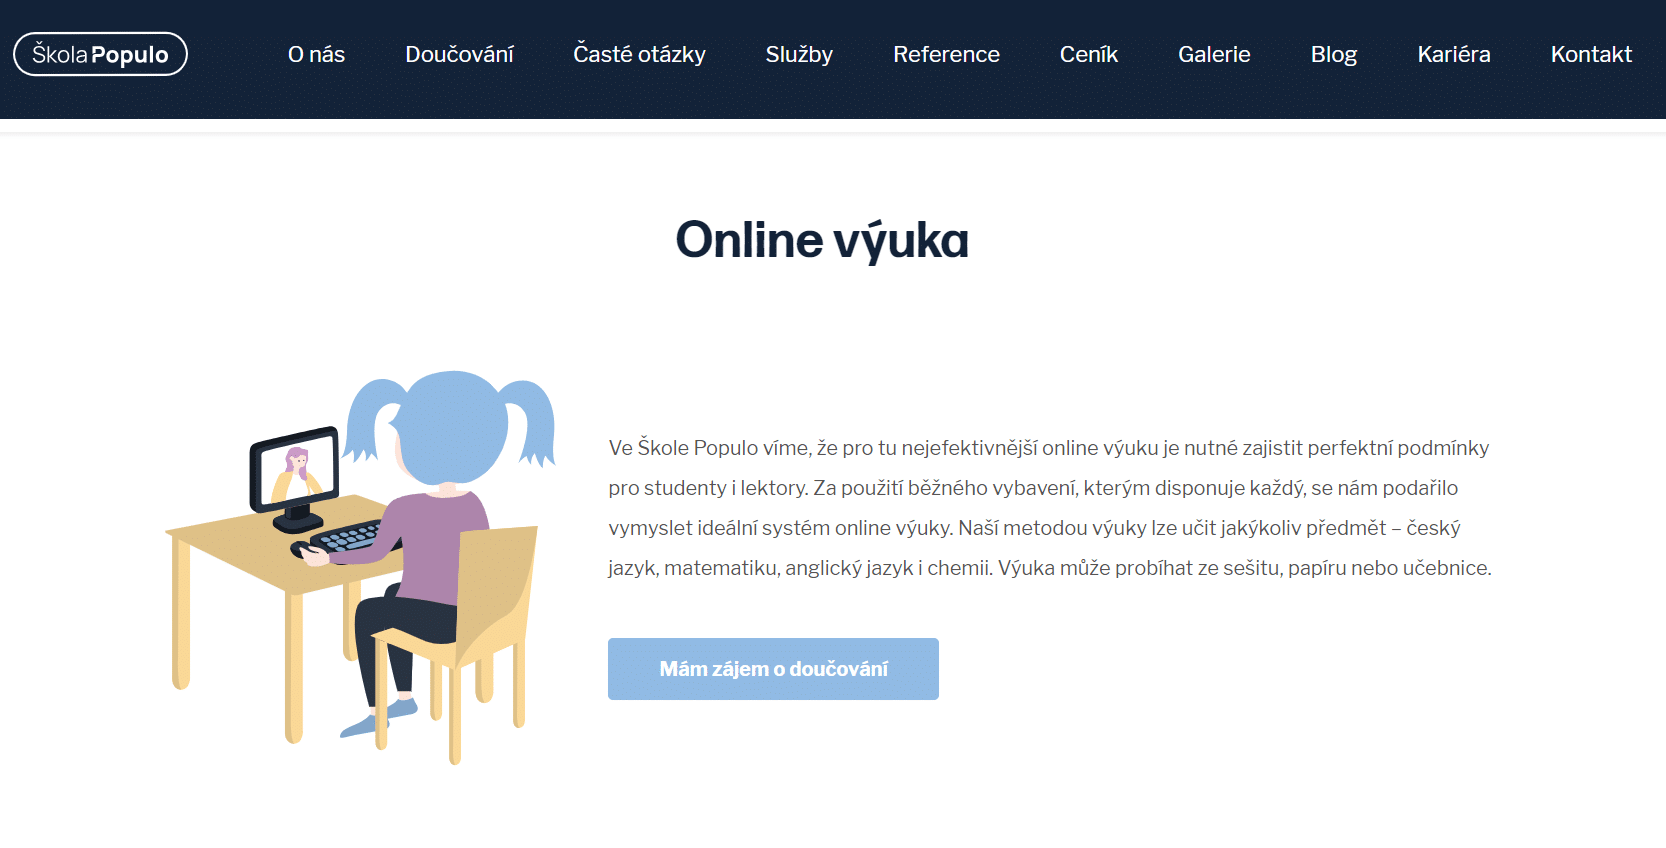 Skola Populo Online Doucovani